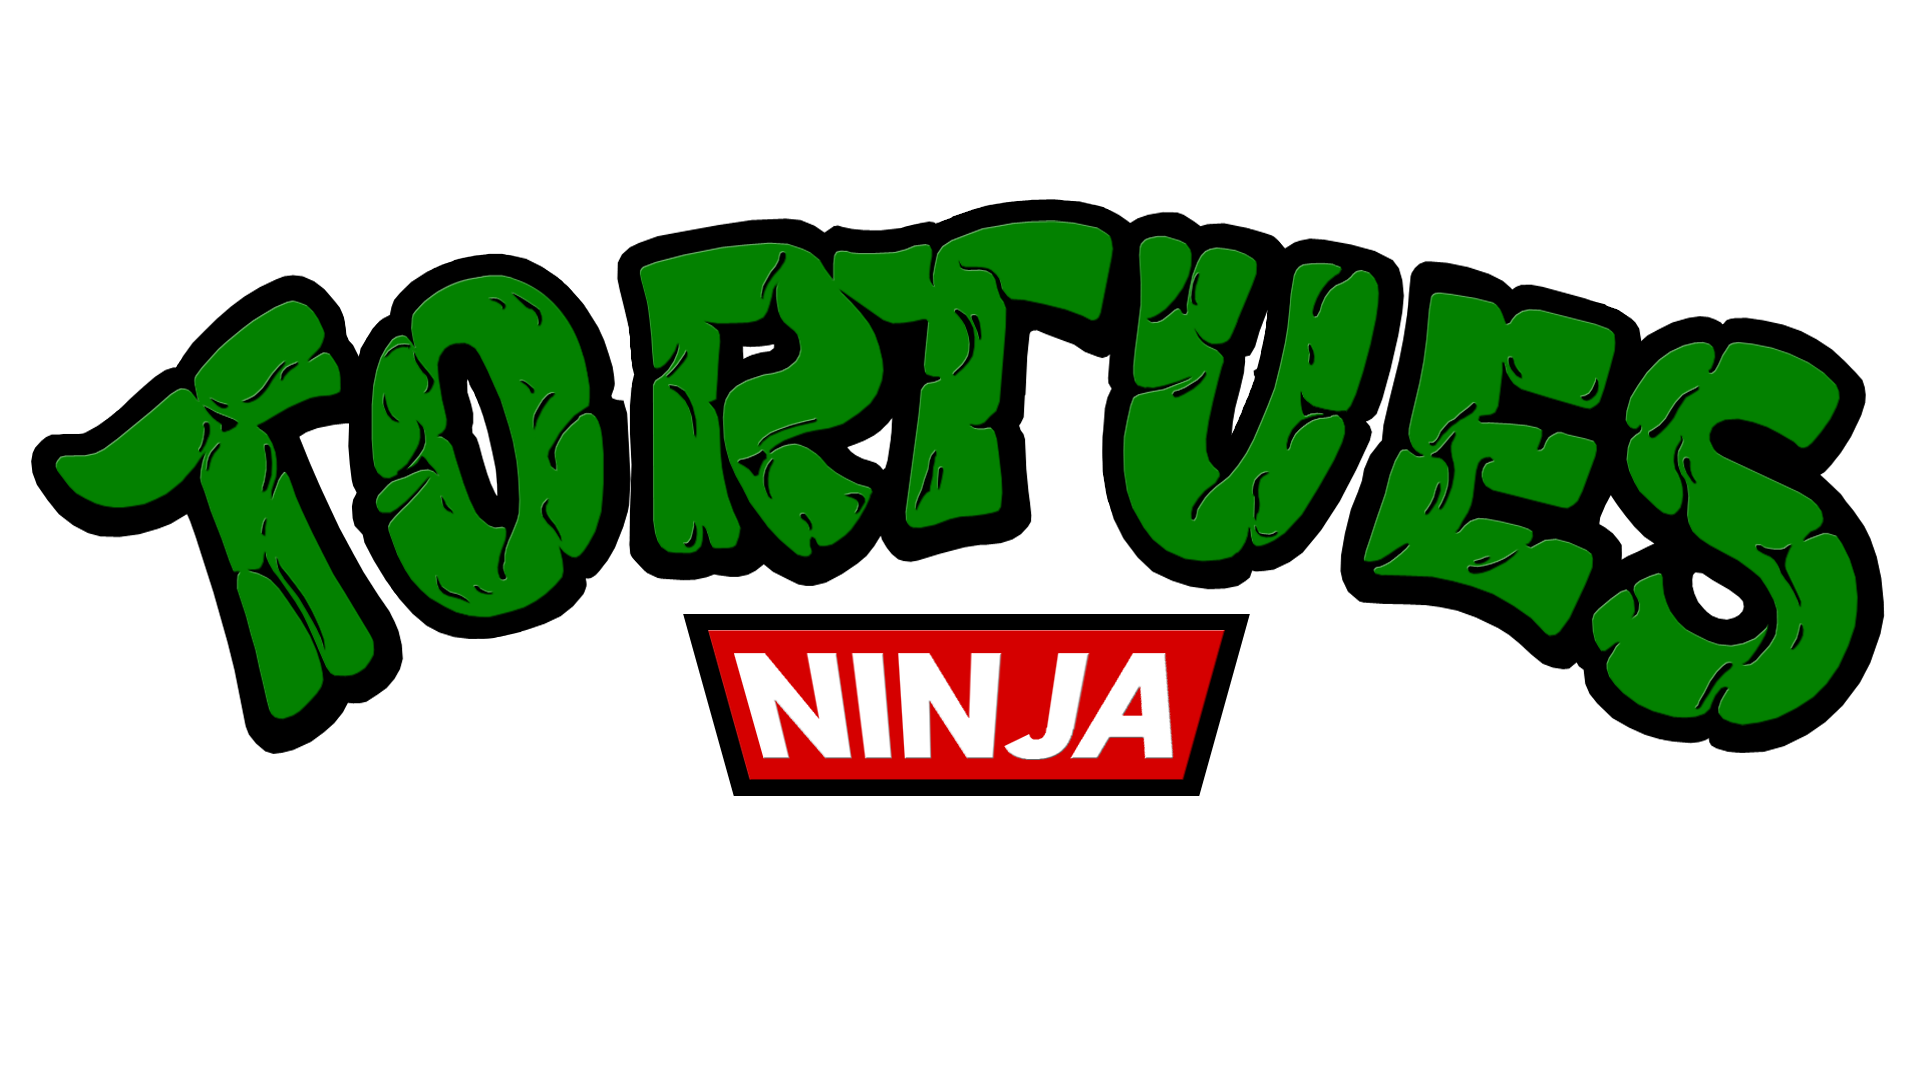 Les Tortues Ninja